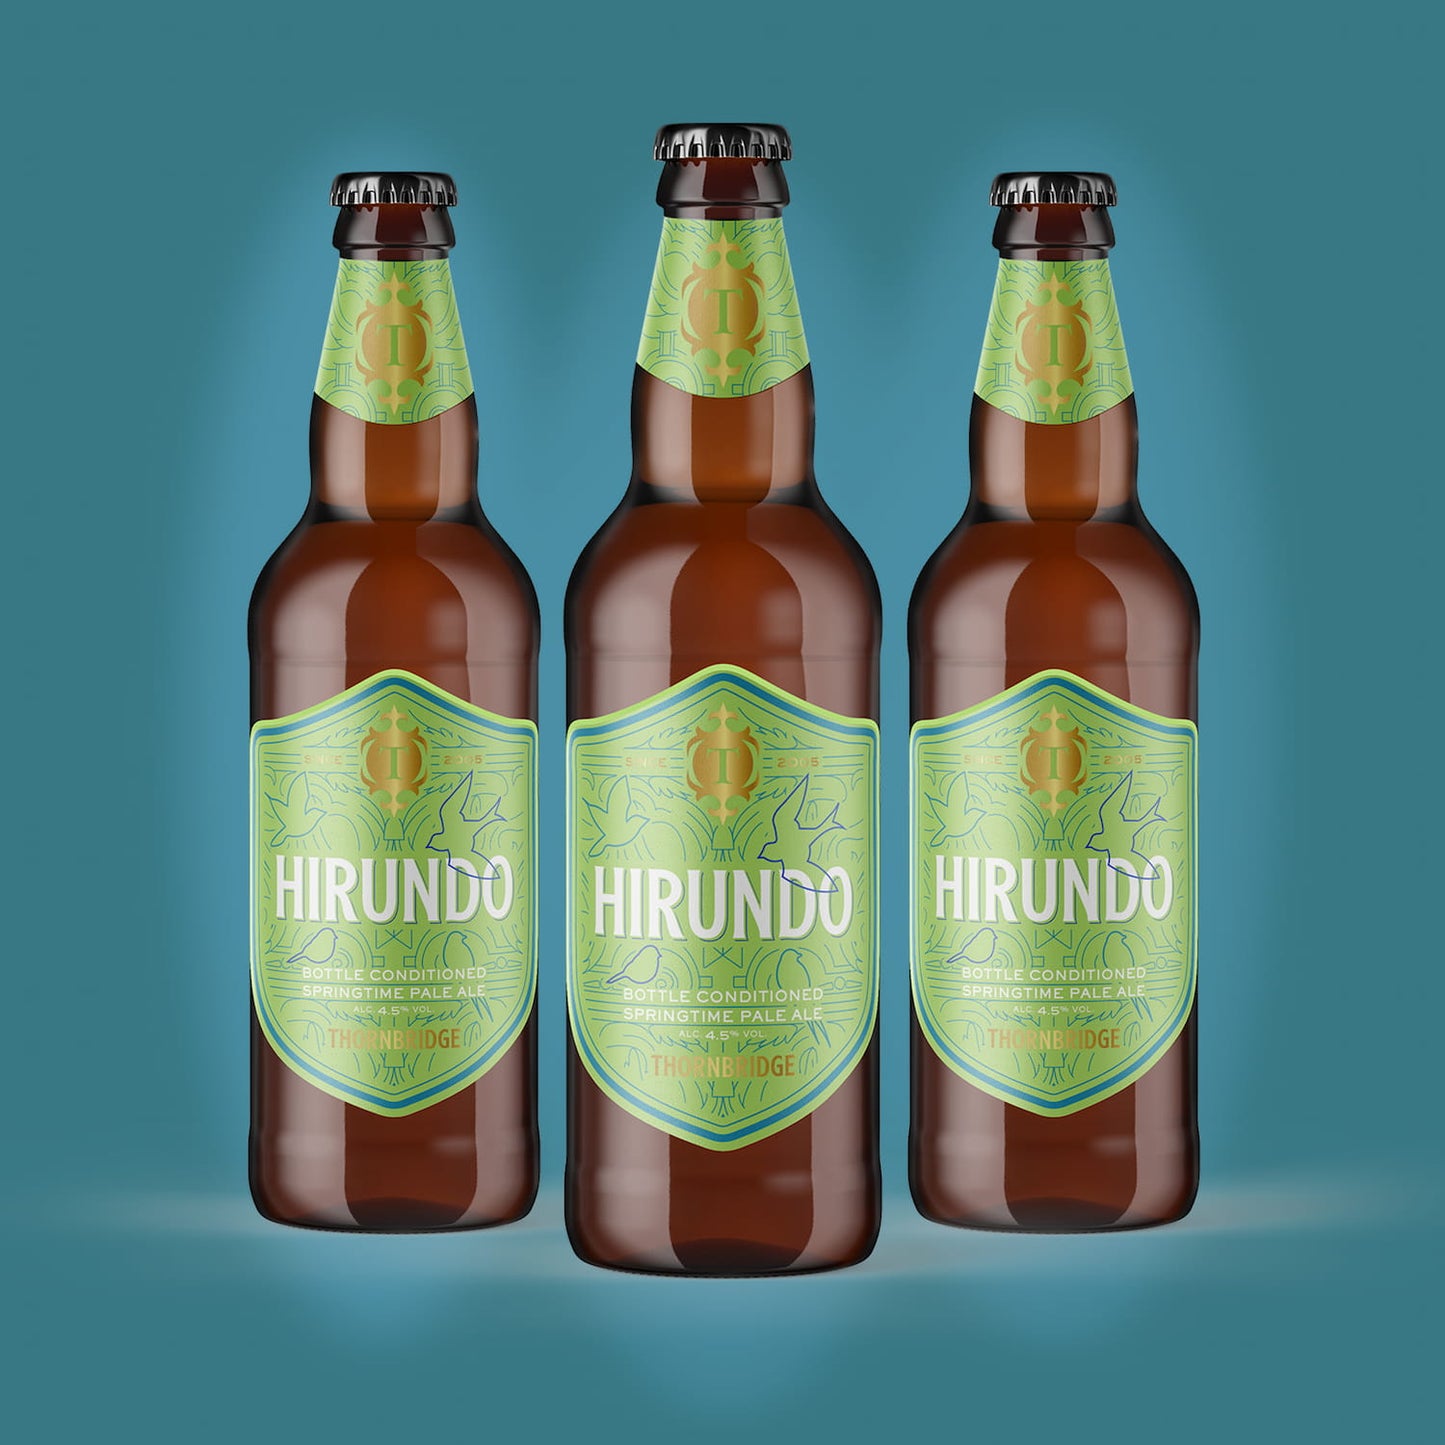 Hirundo, 4.5% Springtime Pale Ale 8 x 500ml bottles Beer - Case Bottle Thornbridge